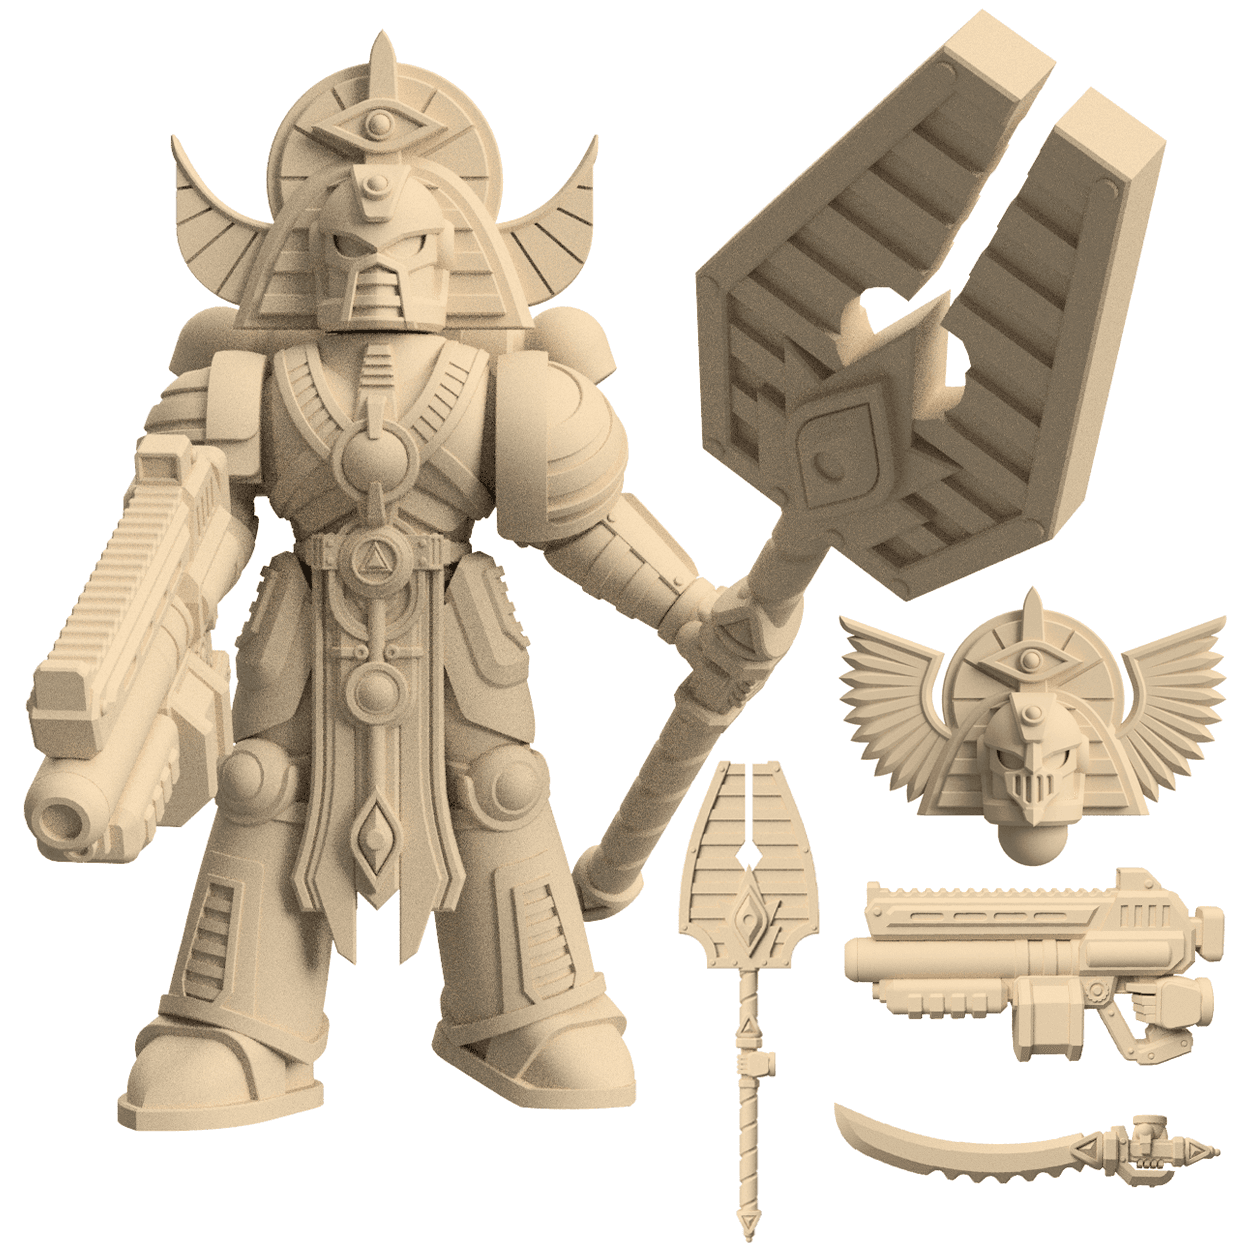 3D Printable Dune Raiser Wizard Miniature for Wargaming - Egyptian-Themed Sci-Fi Warrior 3d model